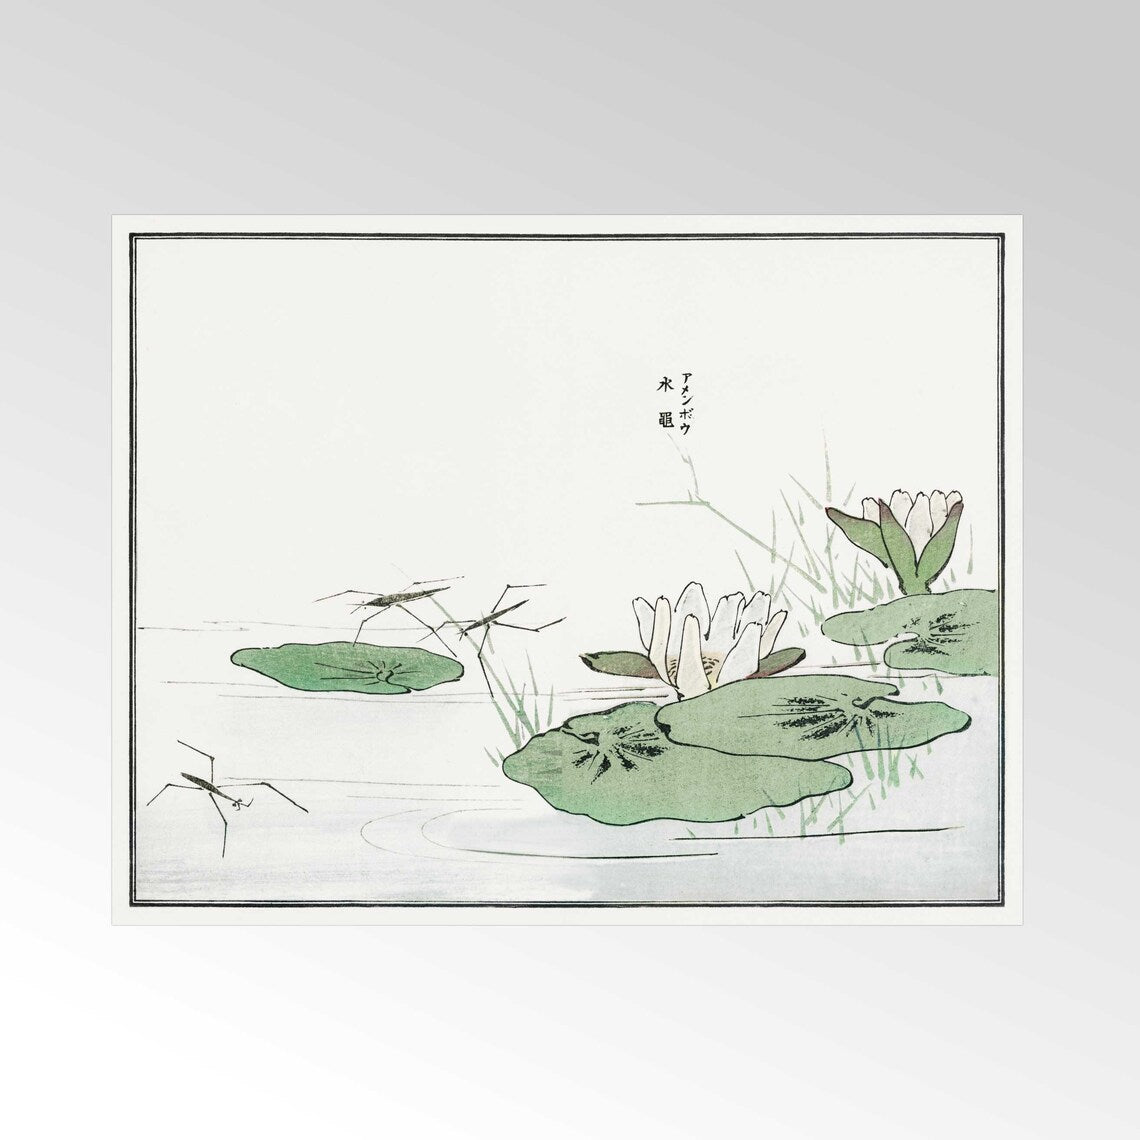 MORIMOTO TOKO - Water Striders On a Pond